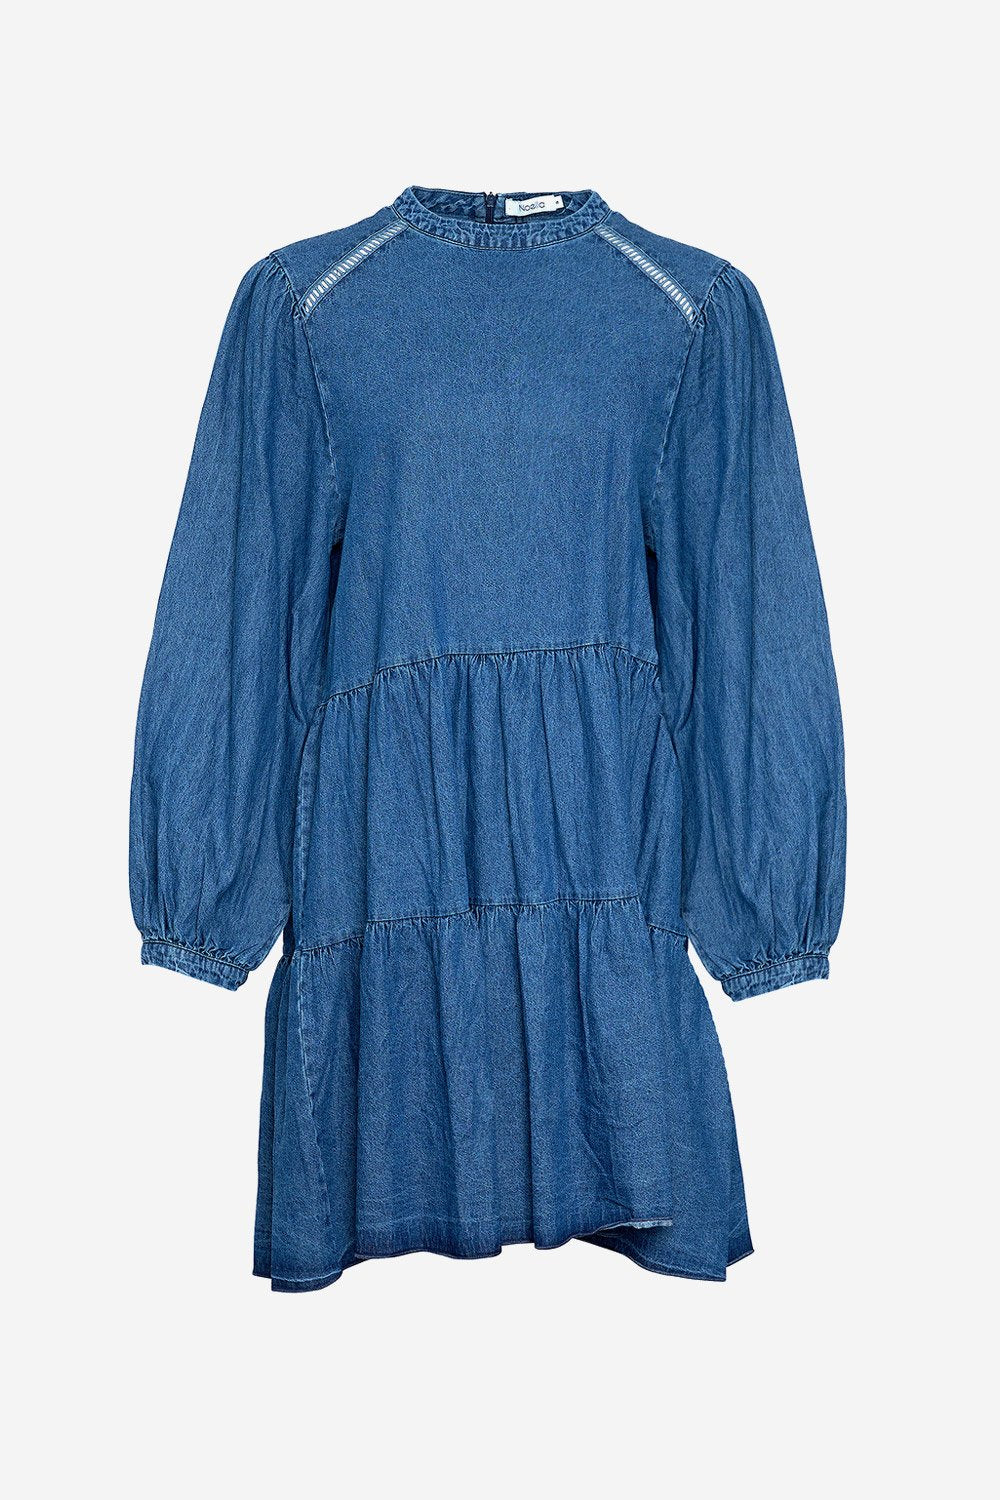 Tif Dress Cotton Denim Dark Blue